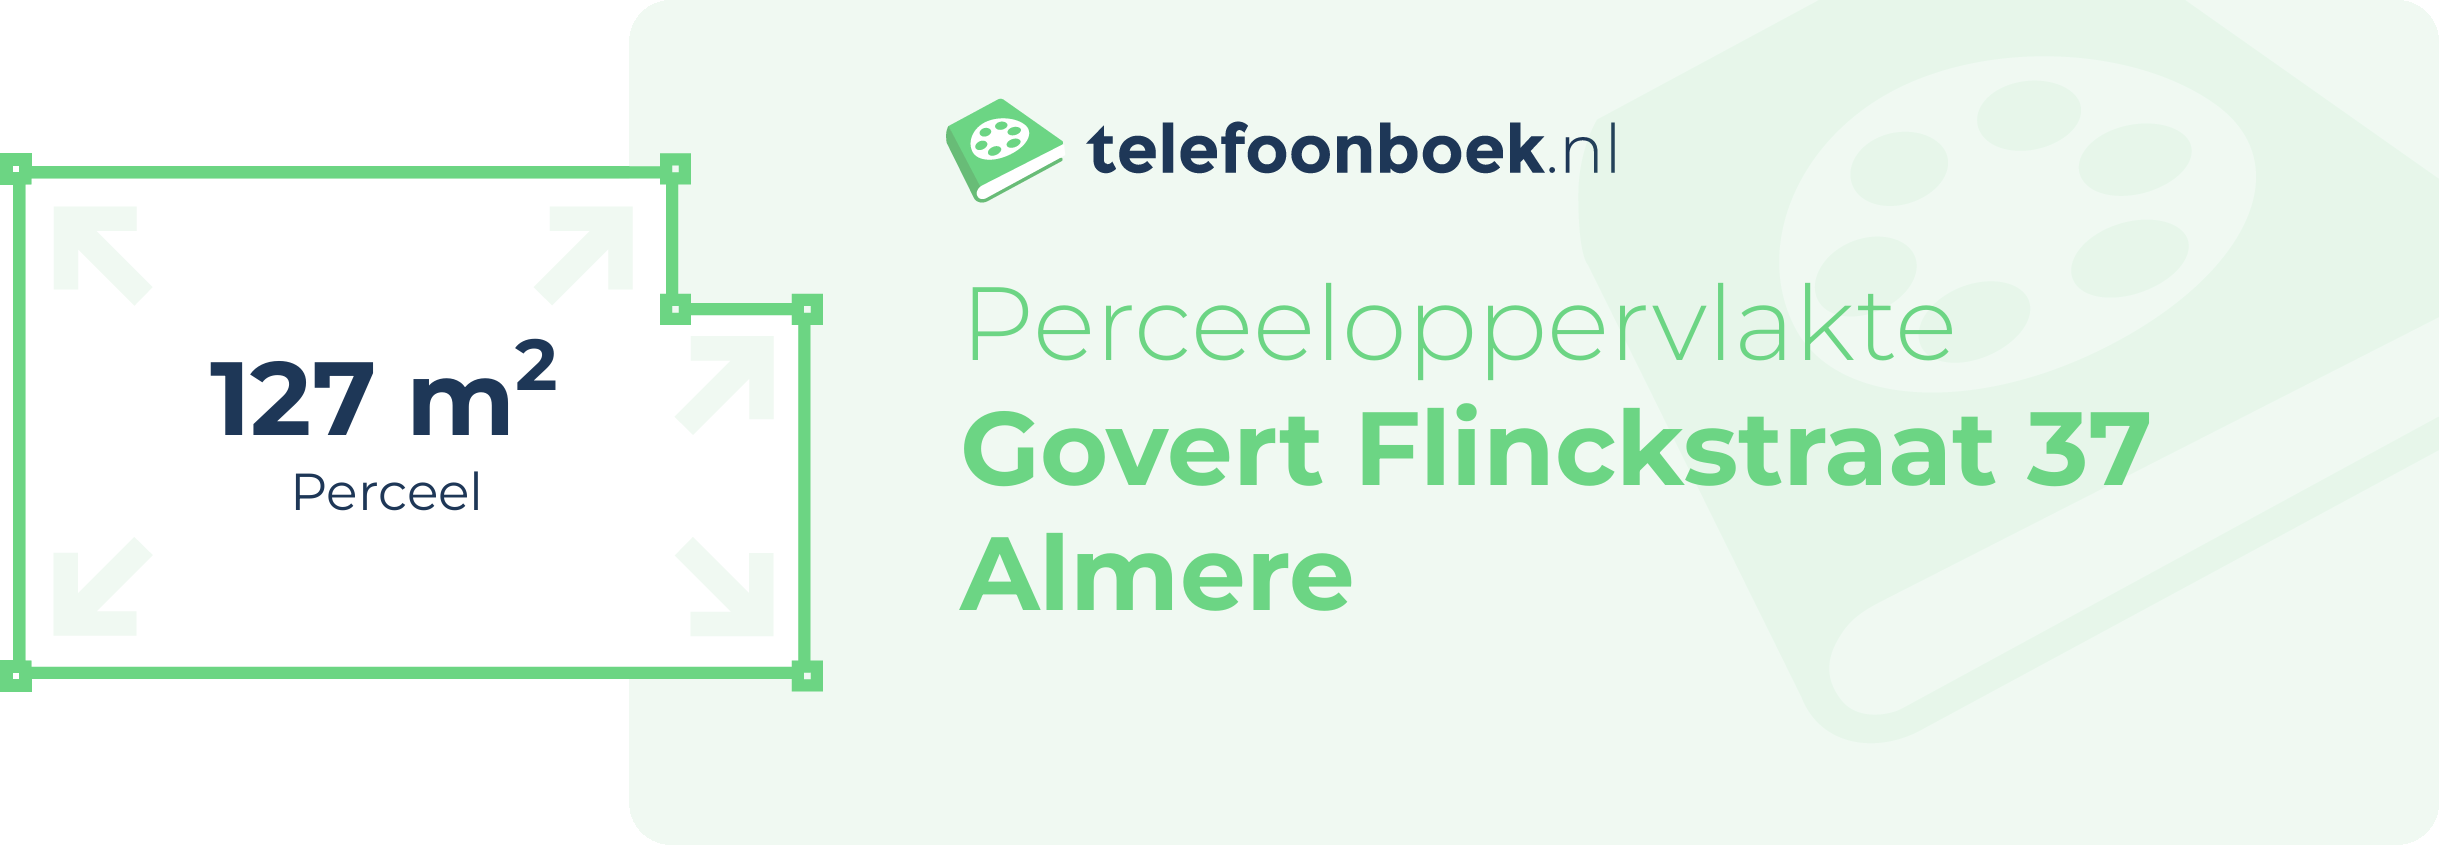 Perceeloppervlakte Govert Flinckstraat 37 Almere